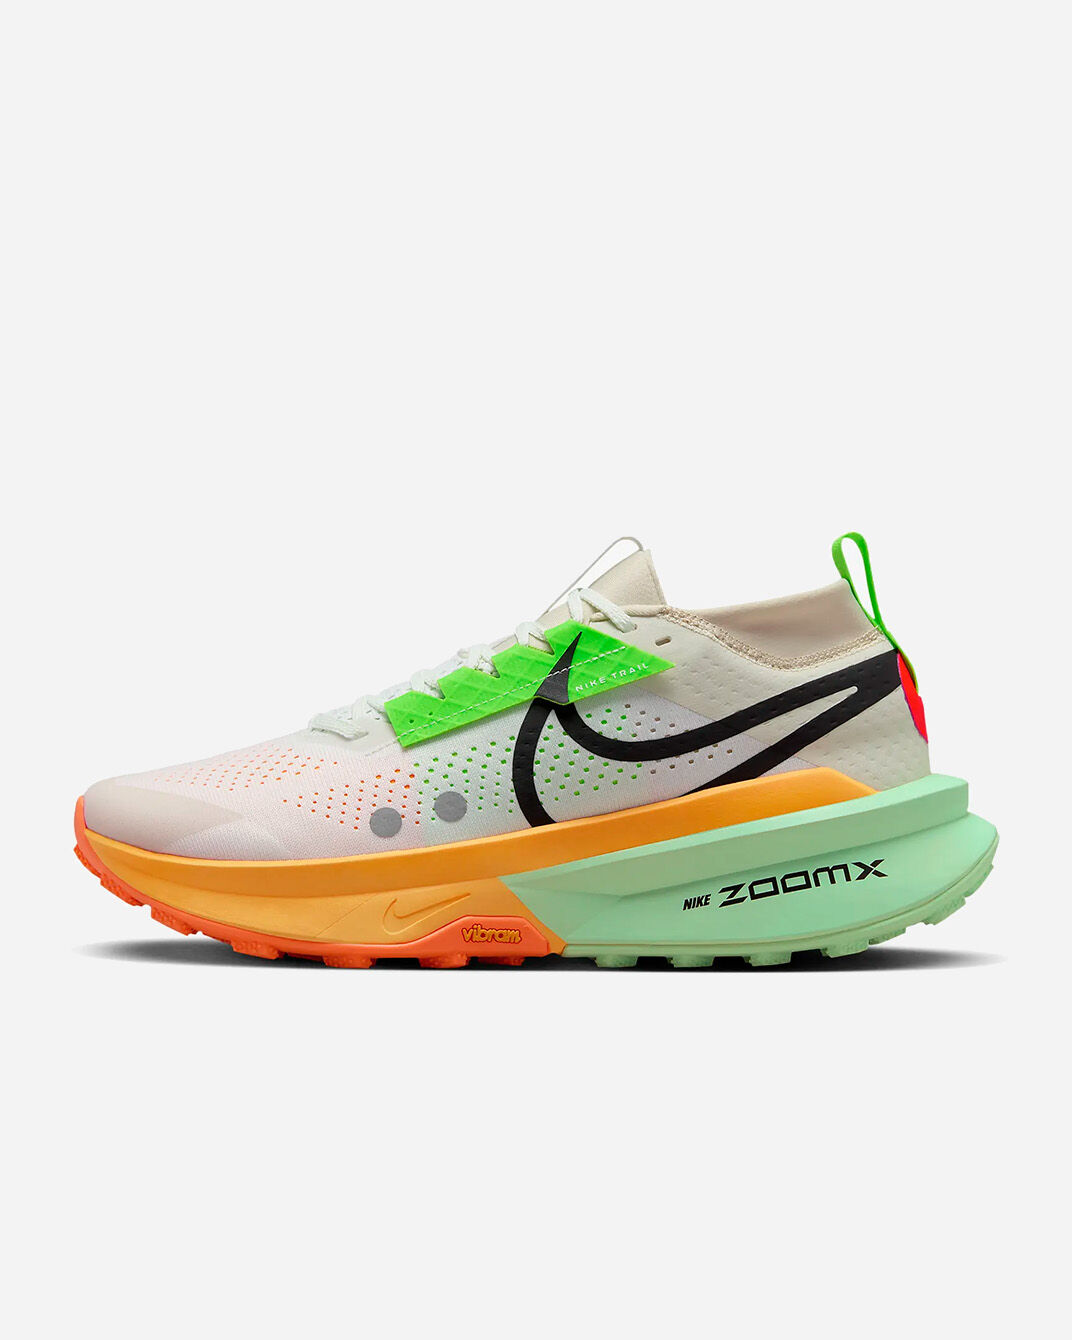 Nike Chaussures de Running Zegama Trail 2 pour Homme Couleur : Summit White/Black-Laser Orange Taille : 42 EU   8.5 US 8.5